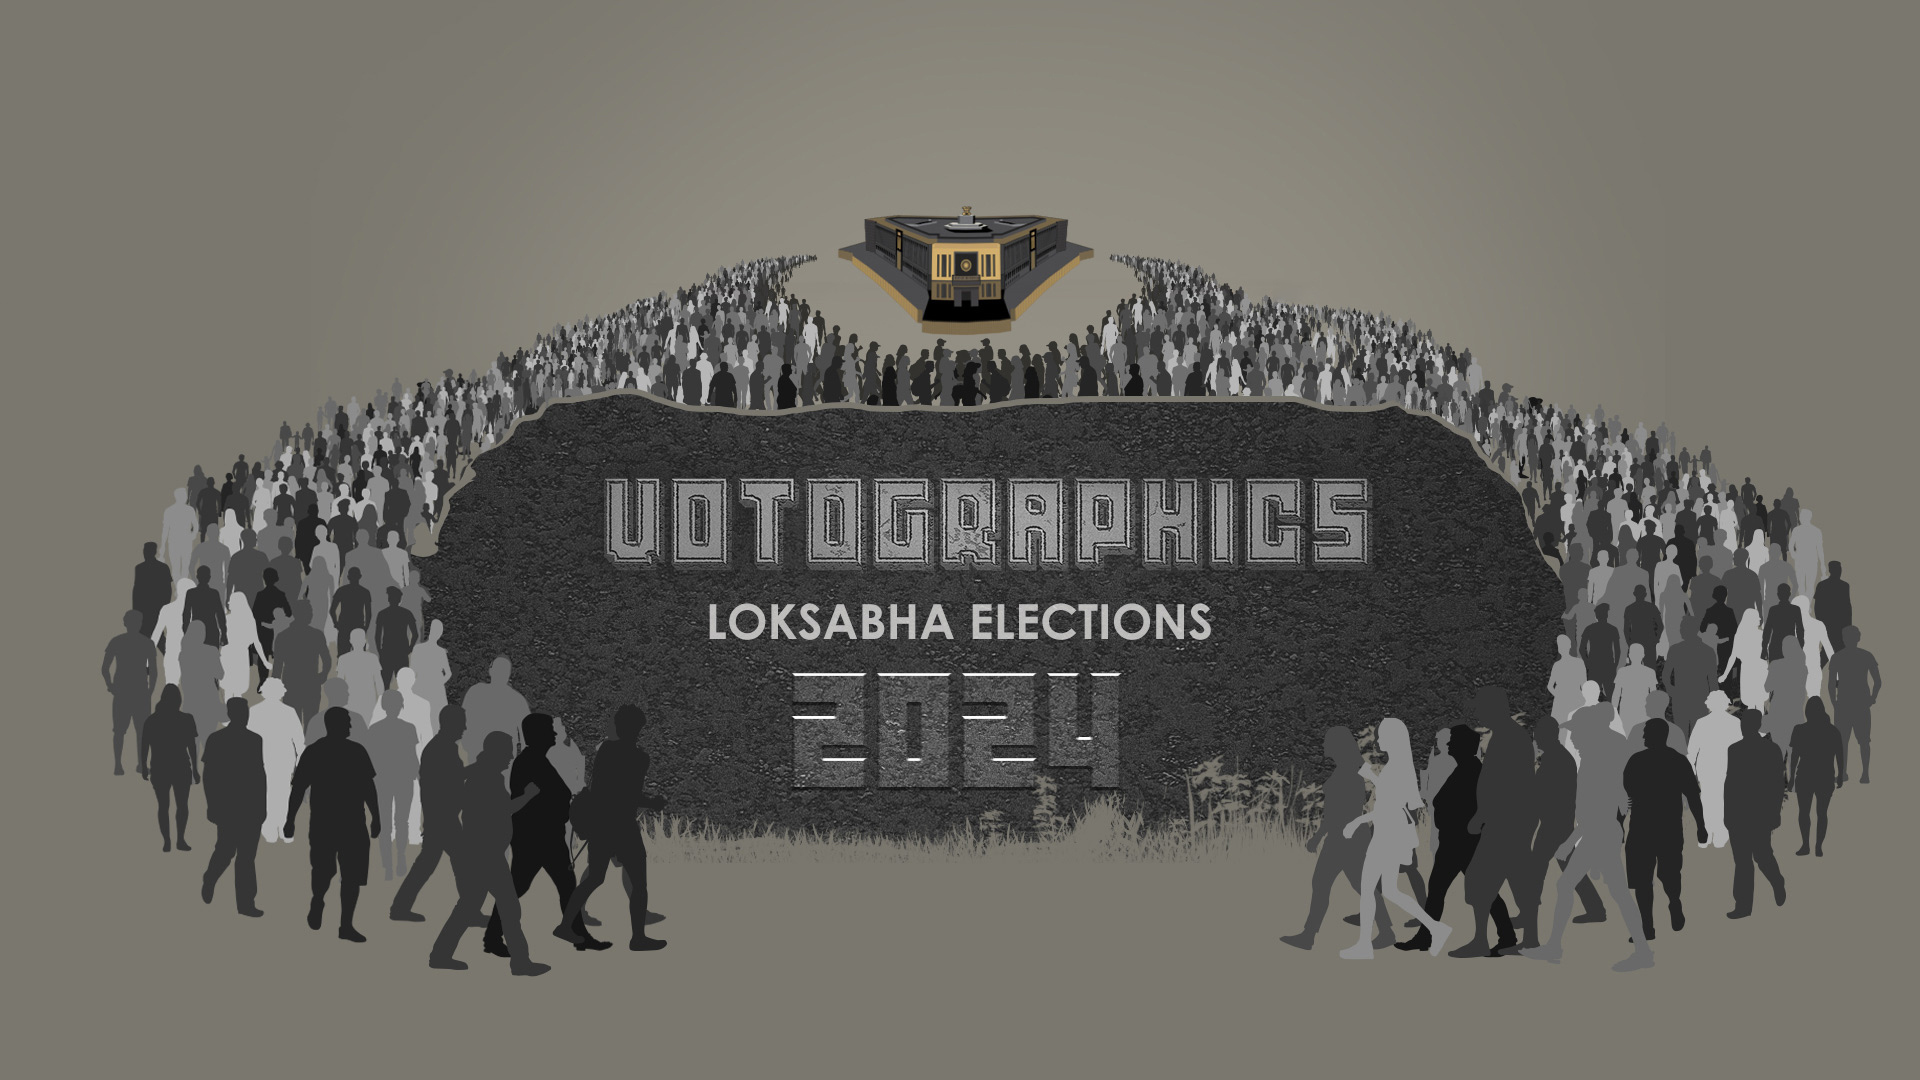 Loksabha Elections 2024